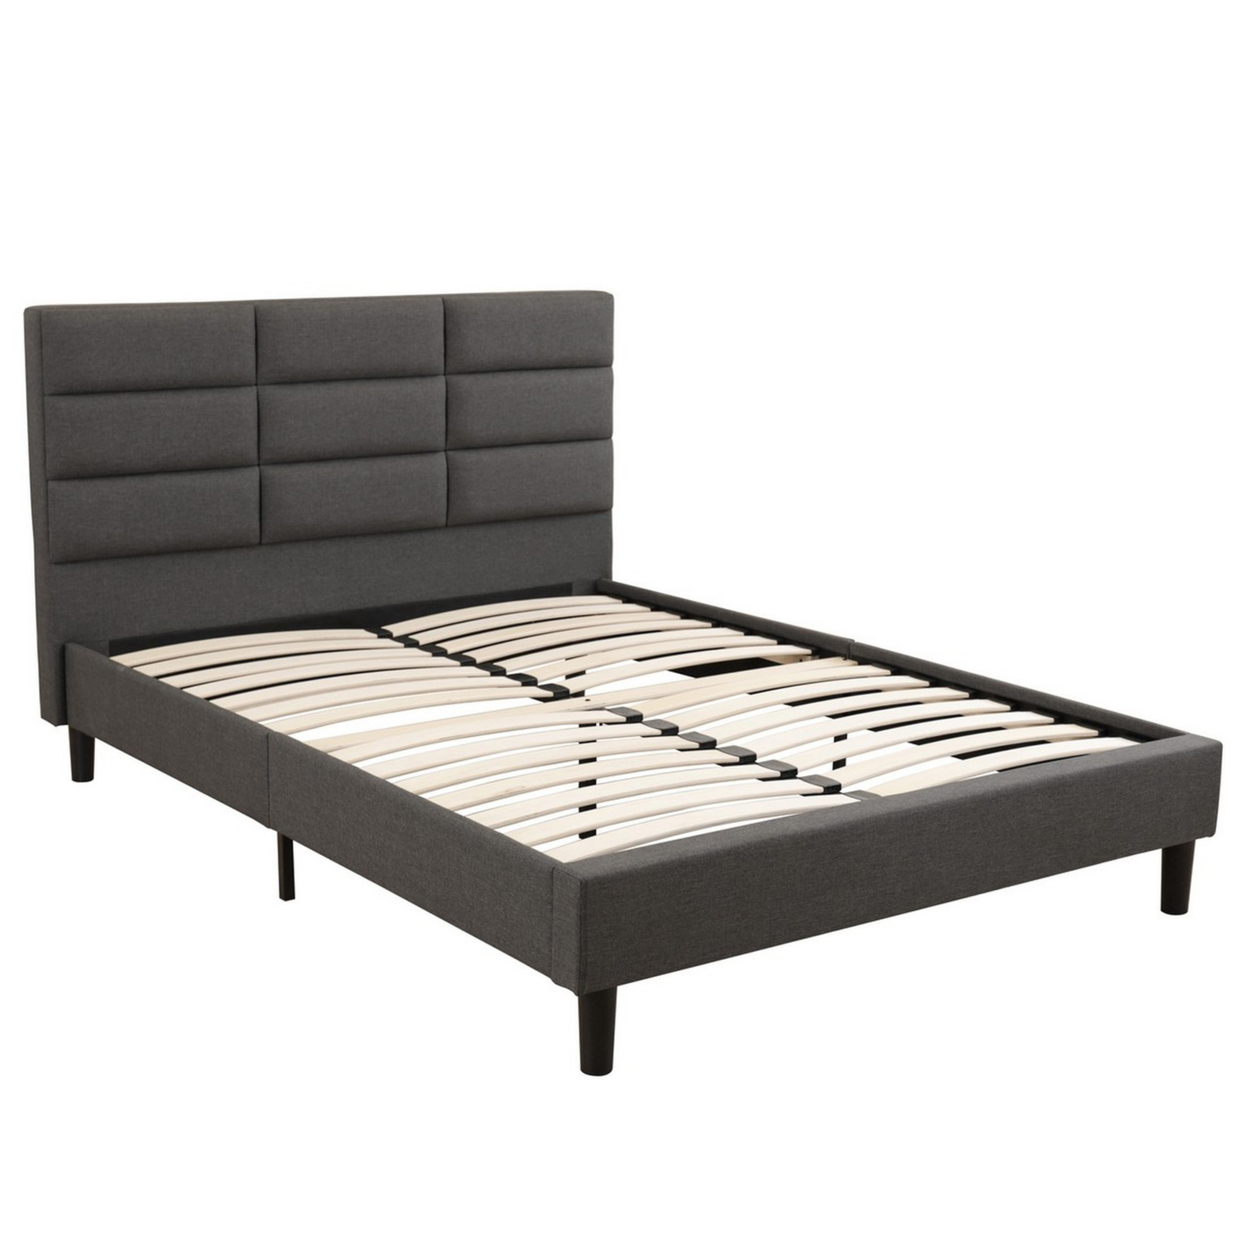 Rin Full Size Platform Bed, Charcoal Gray Linen Upholstery, Panel Headboard- Saltoro Sherpi